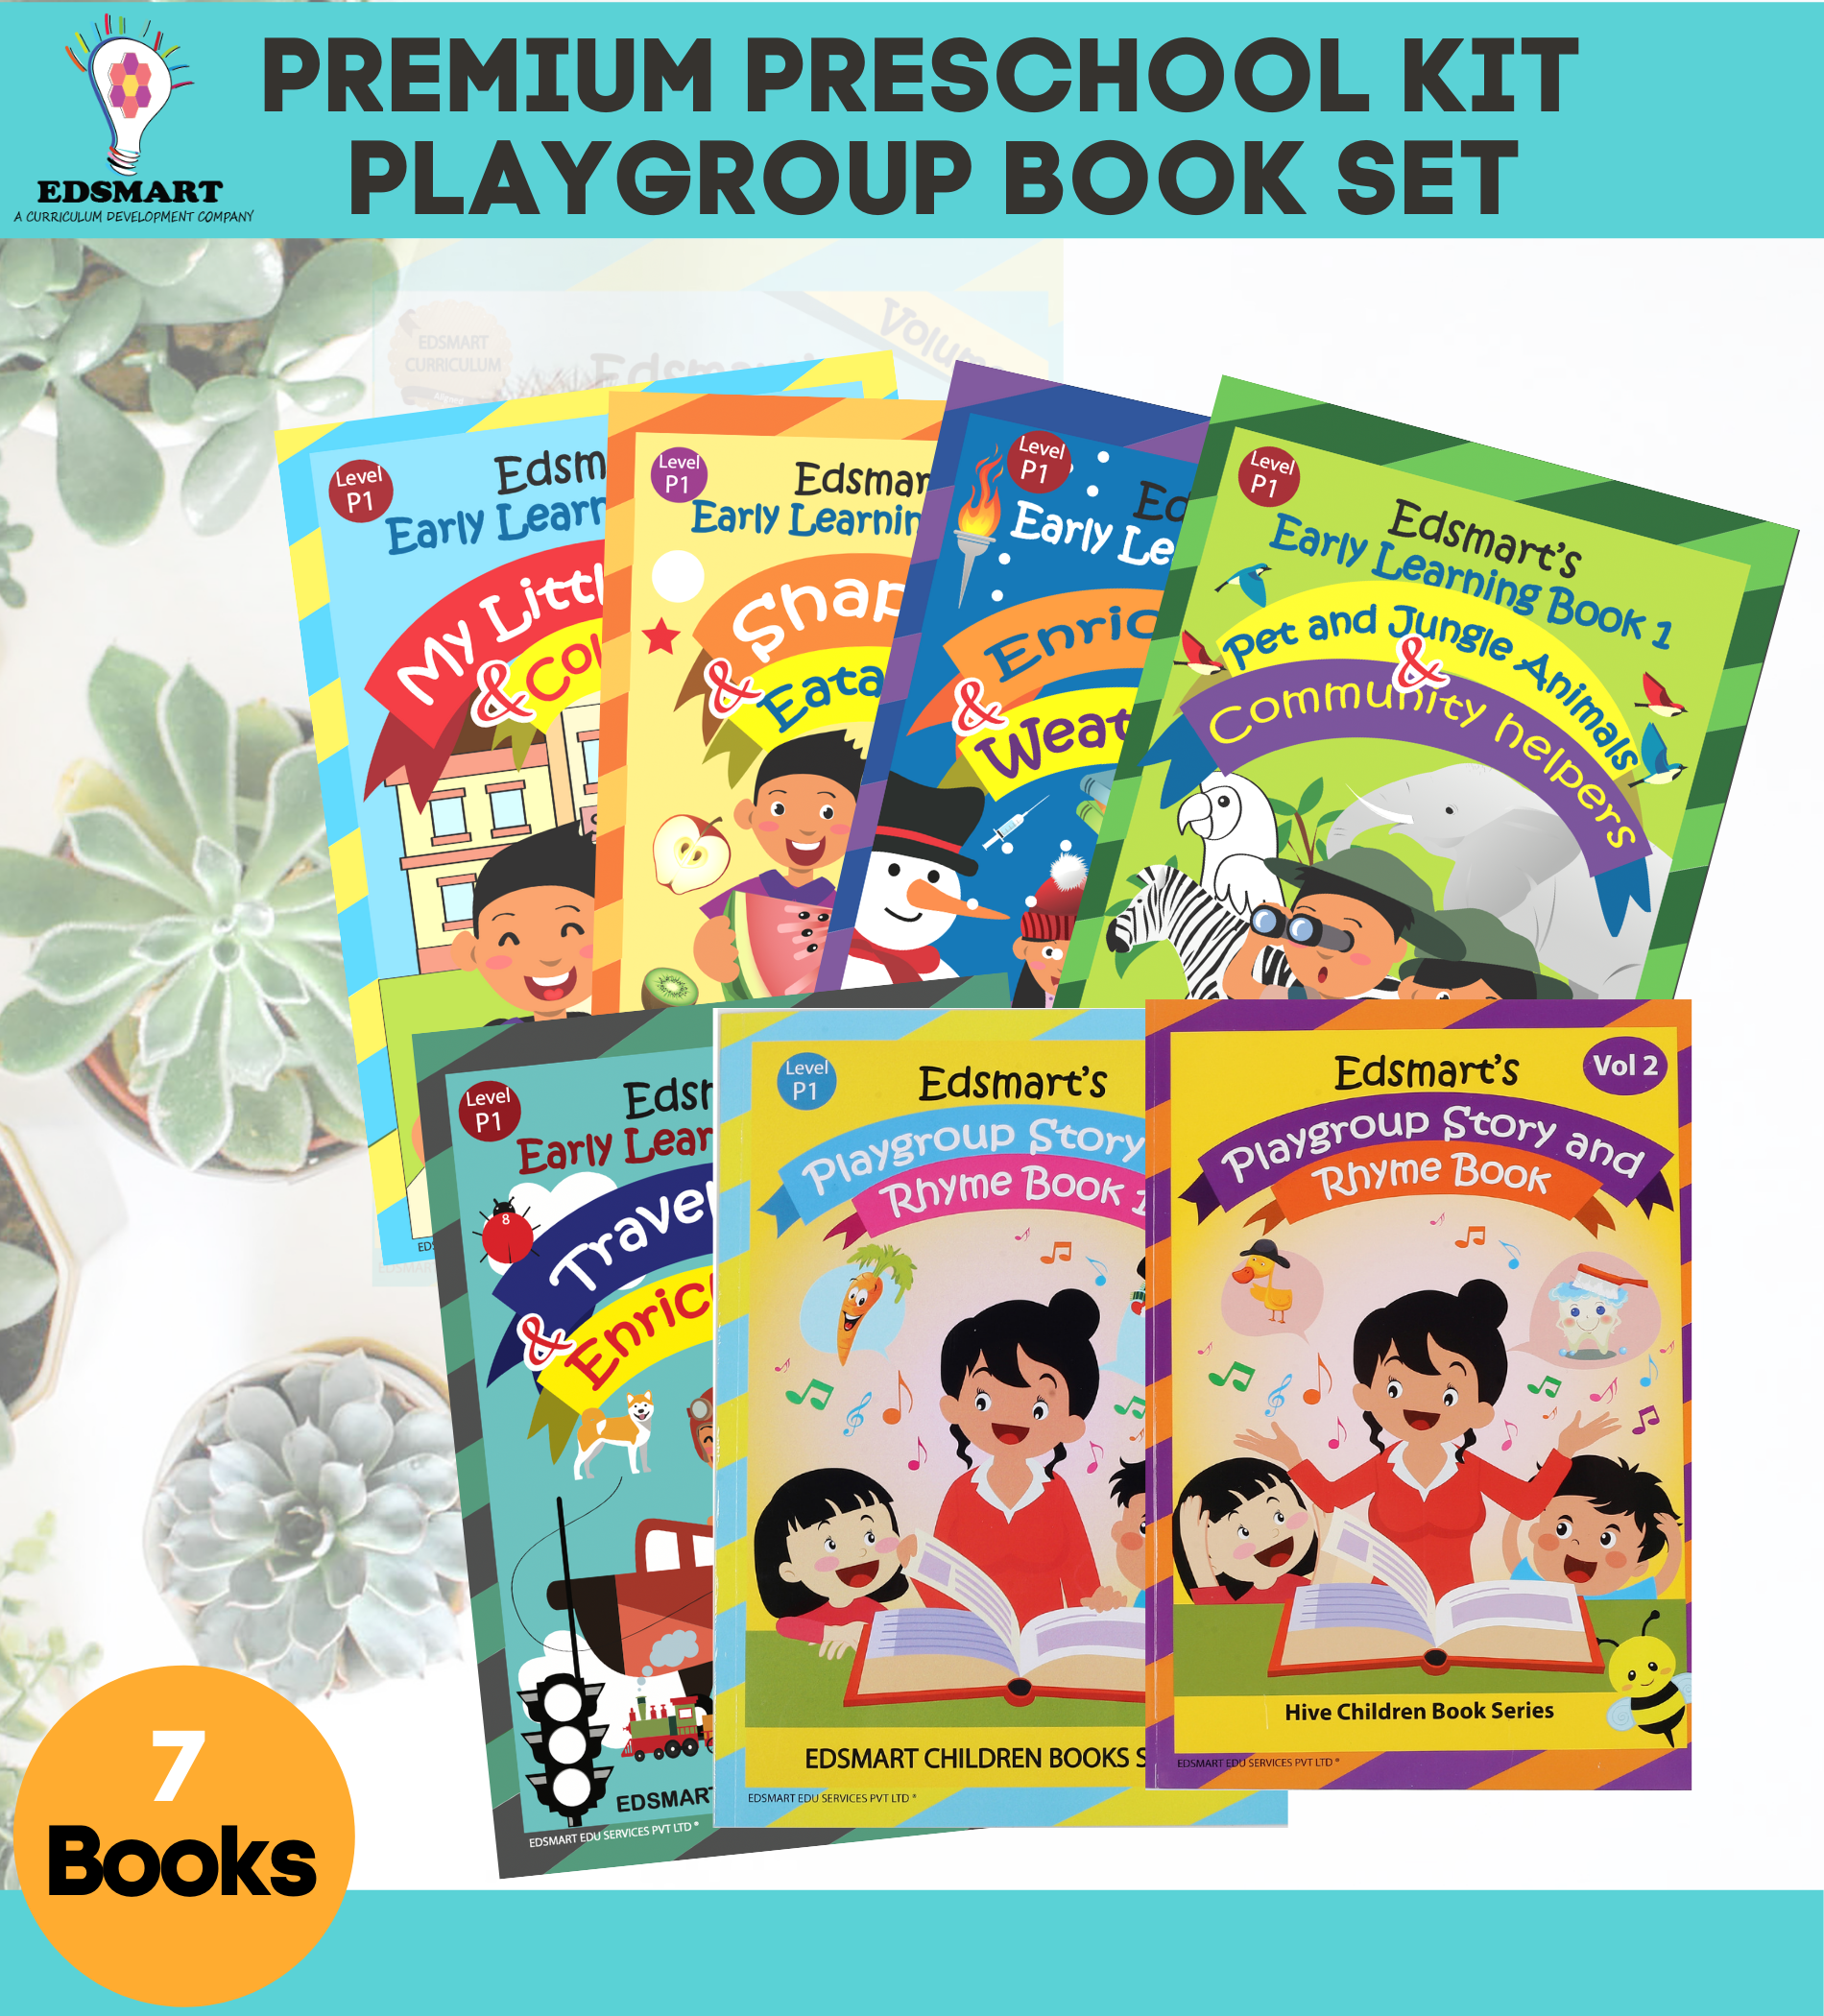 Edsmart Playgroup Preschool Books and Kits 